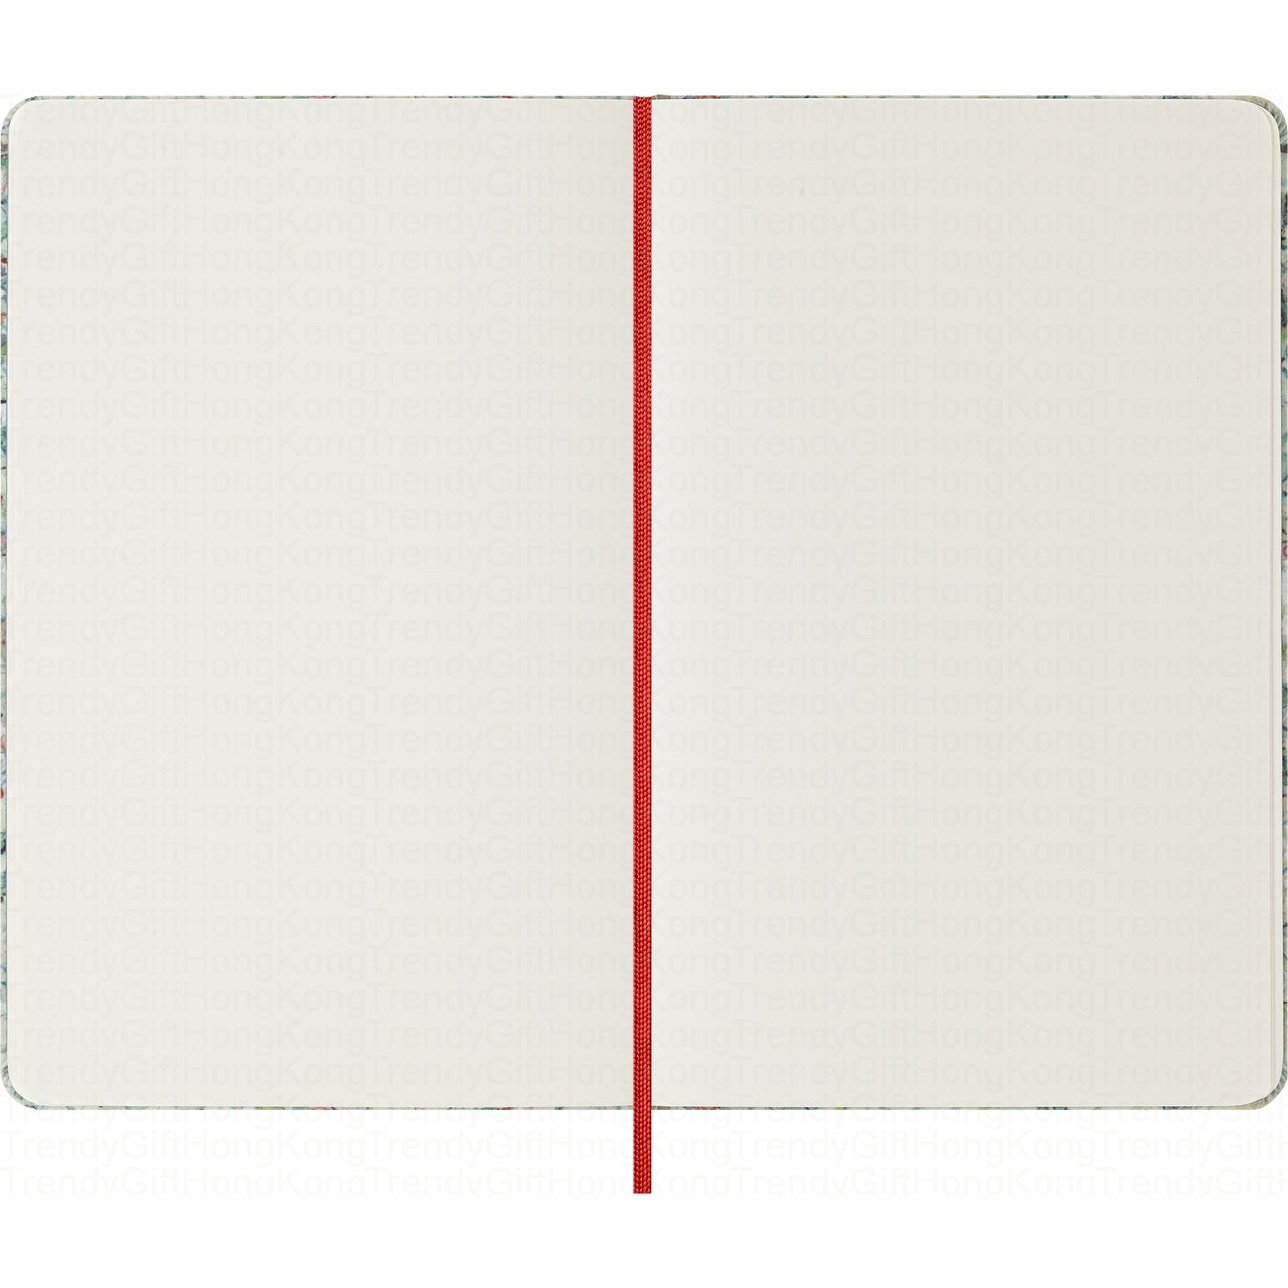 Moleskine Van Gogh Museum Limited Edition Sketchbook - Large Plain Hardcover 165 GSM trendygifthk